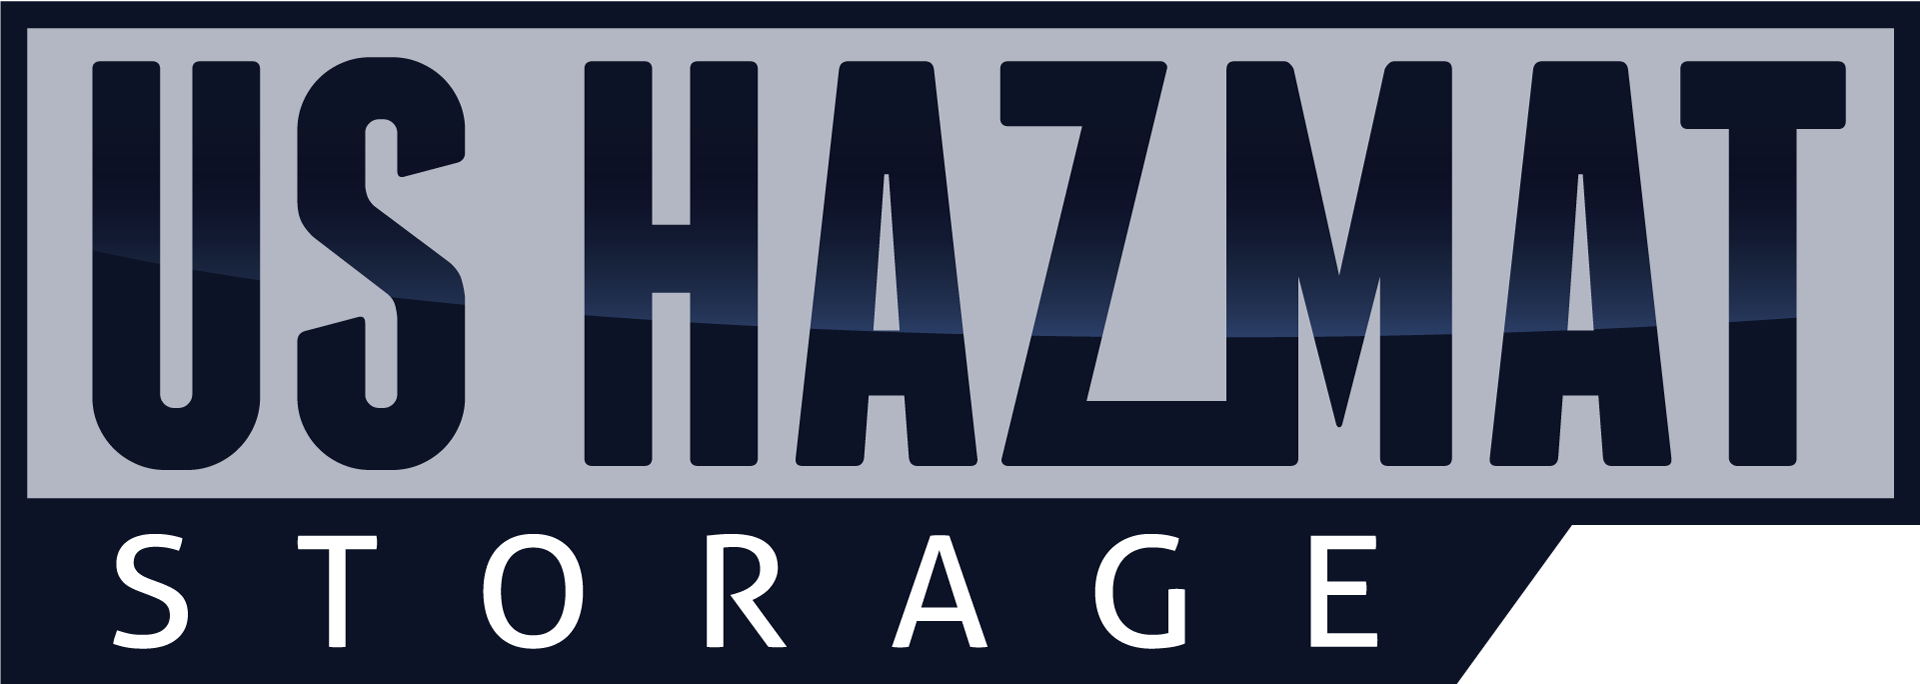 US Hazmat Storage logo